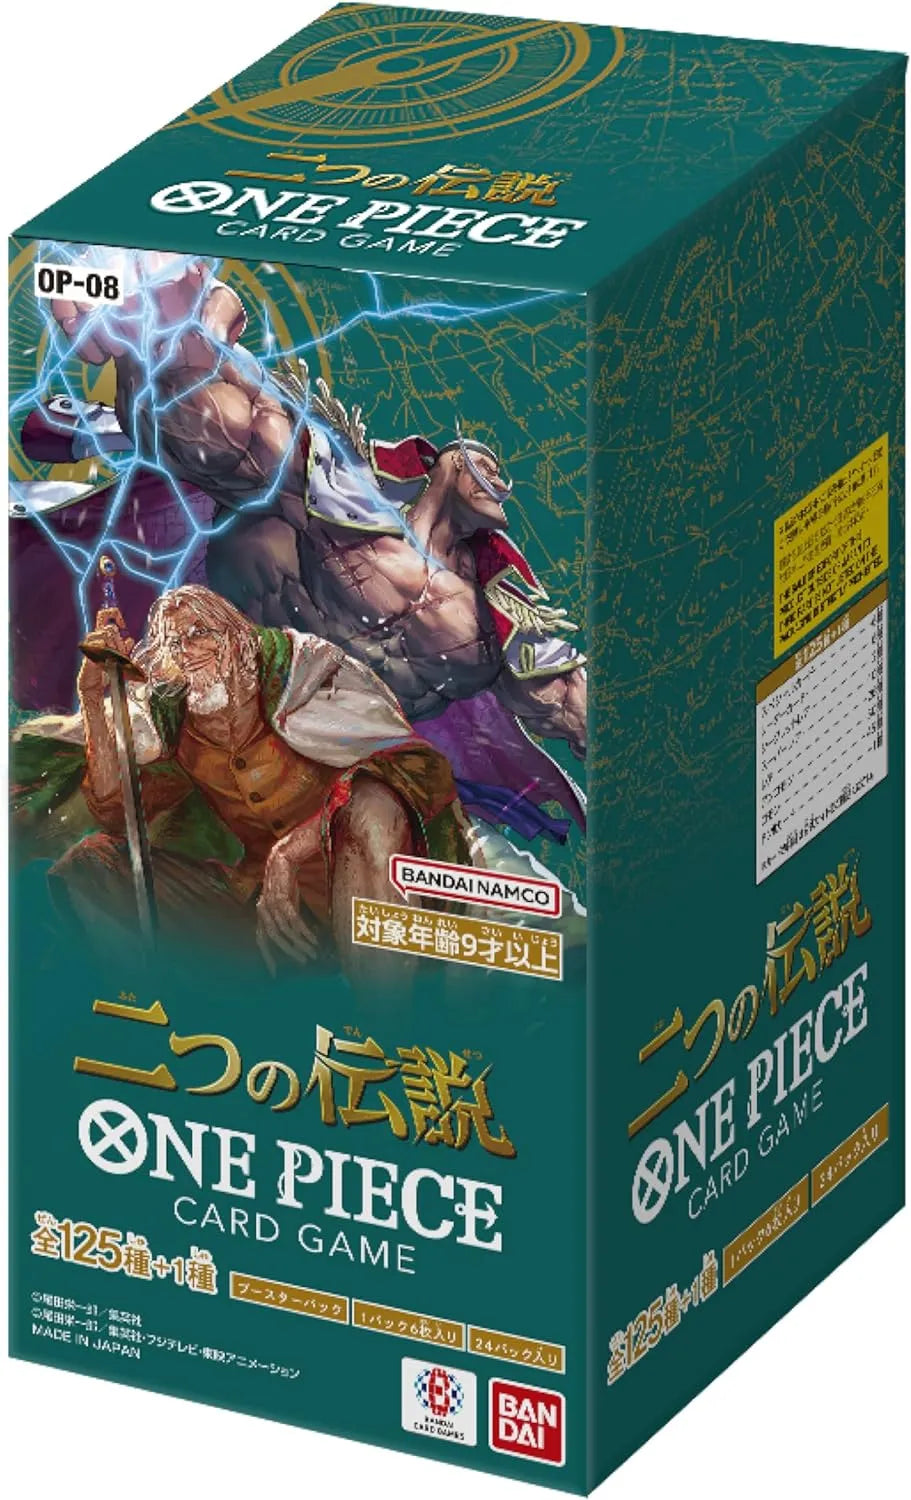 One Piece / Bandai